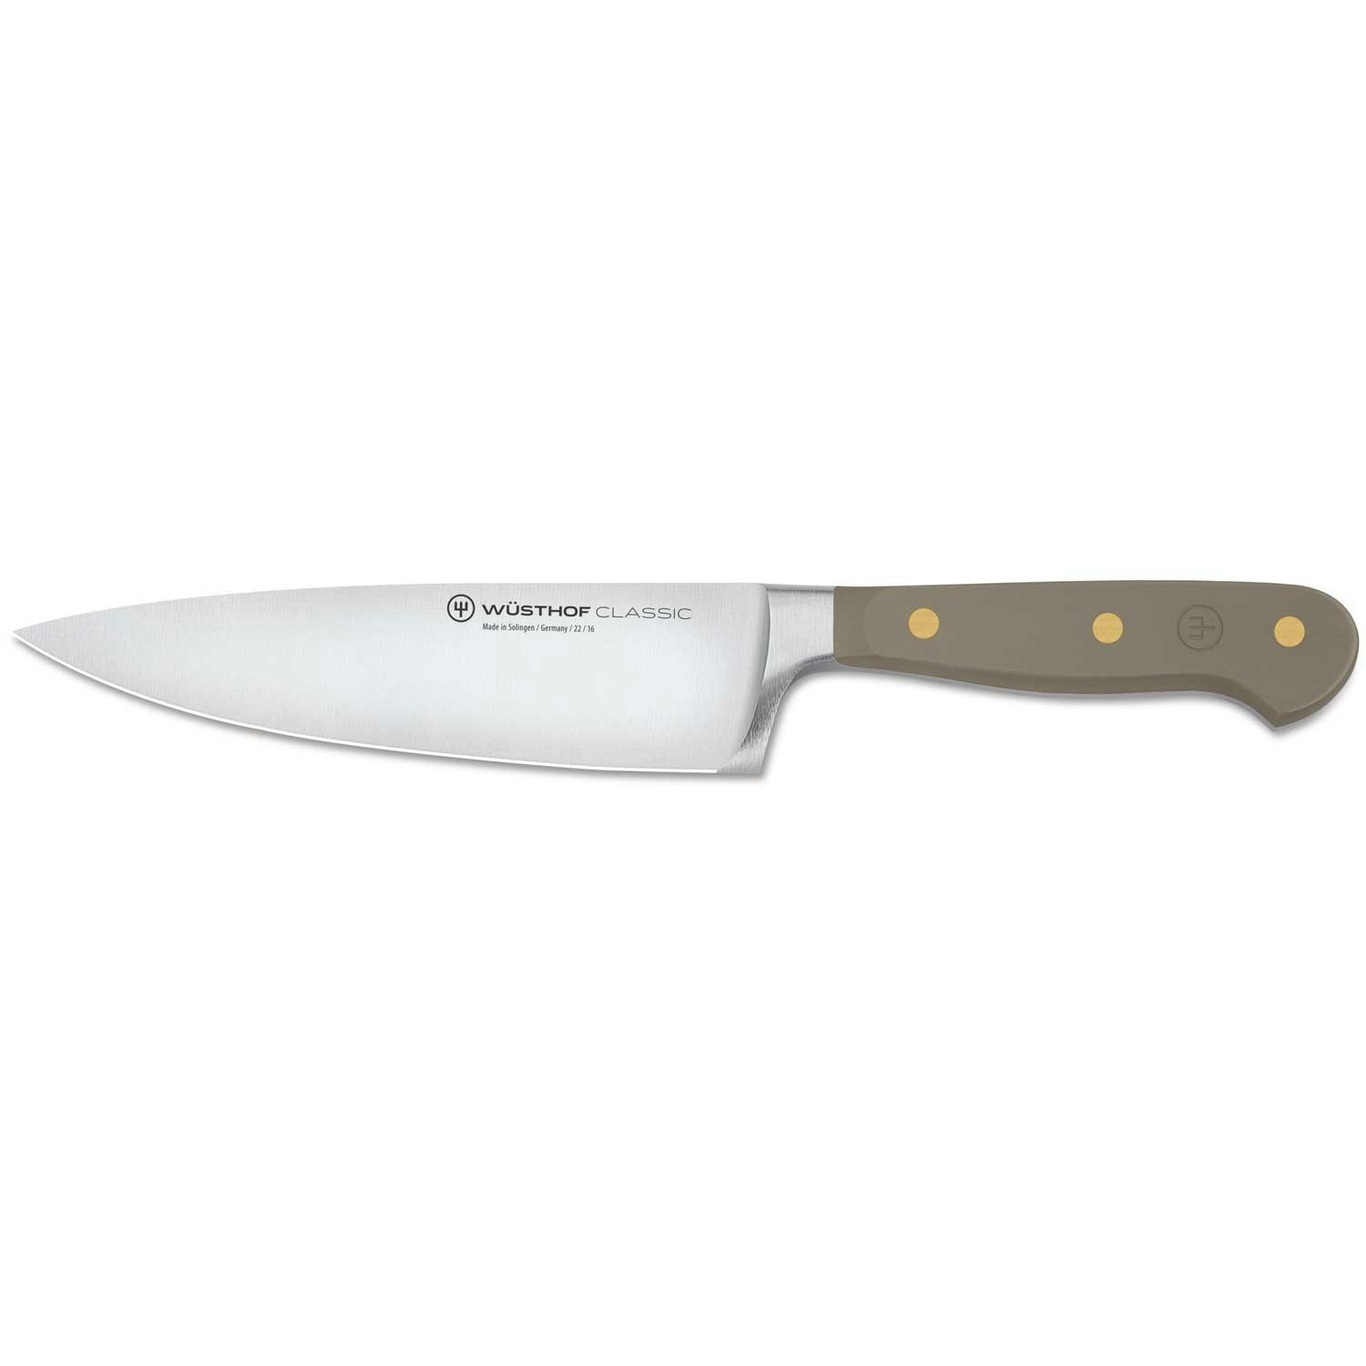 https://royaldesign.com/image/2/wusthof-classic-colour-chef-knife-16-cm-0?w=800&quality=80